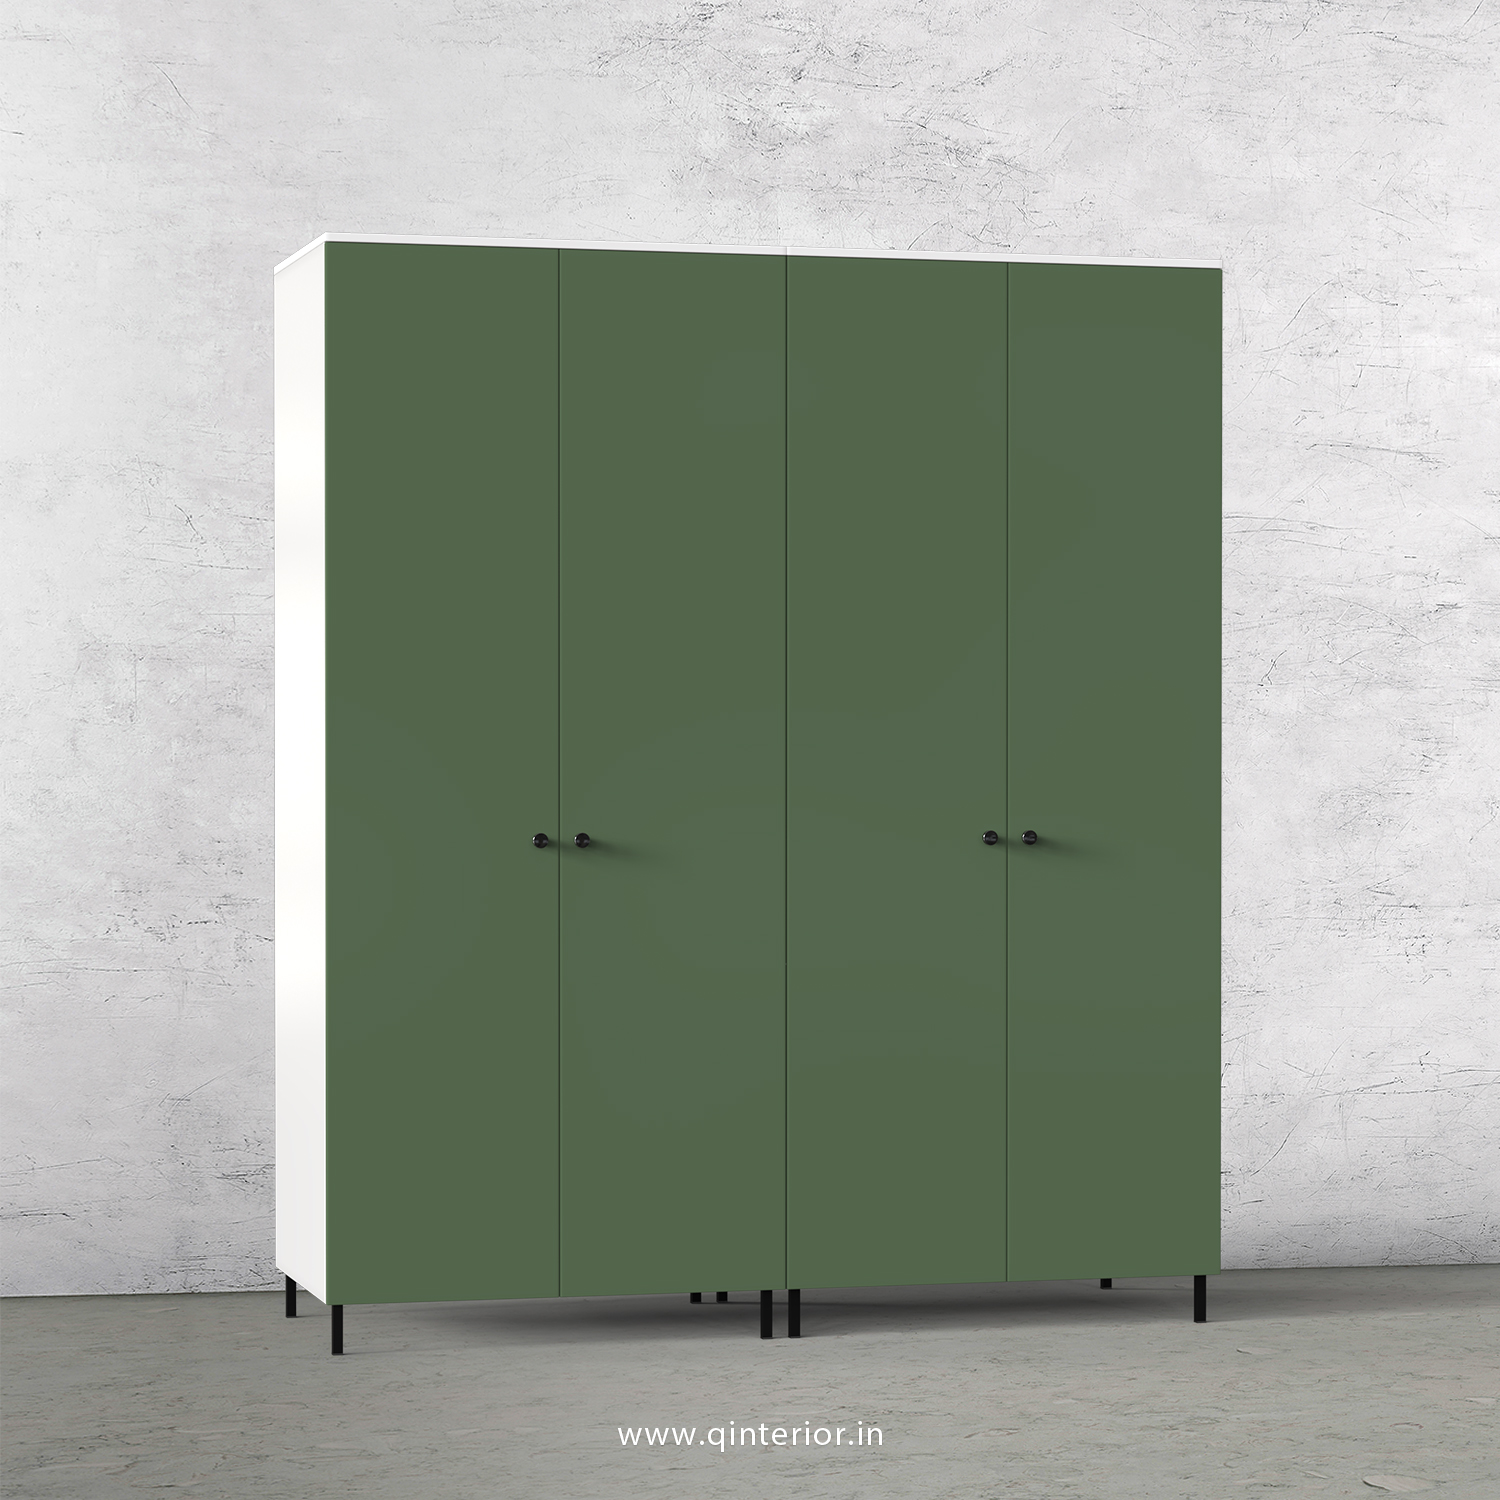 Lambent 4 Door Wardrobe in White and English Ivy Finish – FWRD001 C82